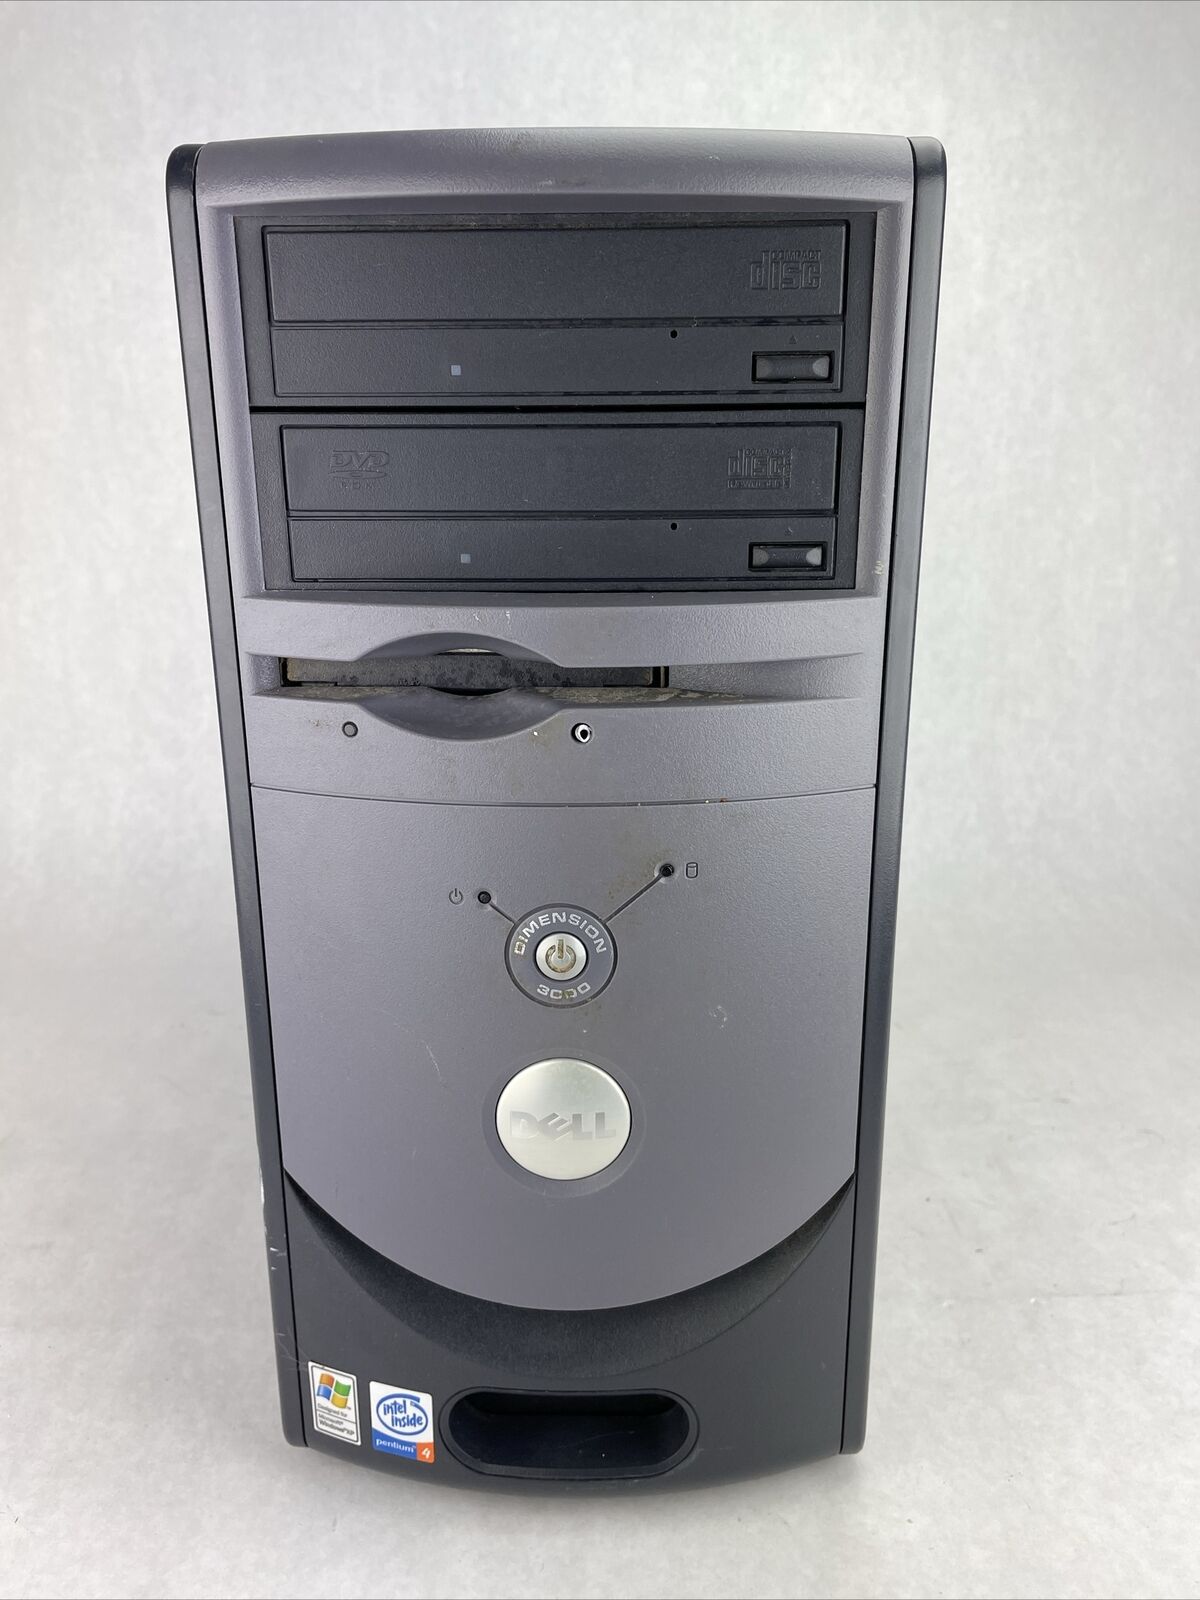 Dell Dimension 3000 MT Intel Pentium 4 2.8GHz 1GB RAM No HDD No OS